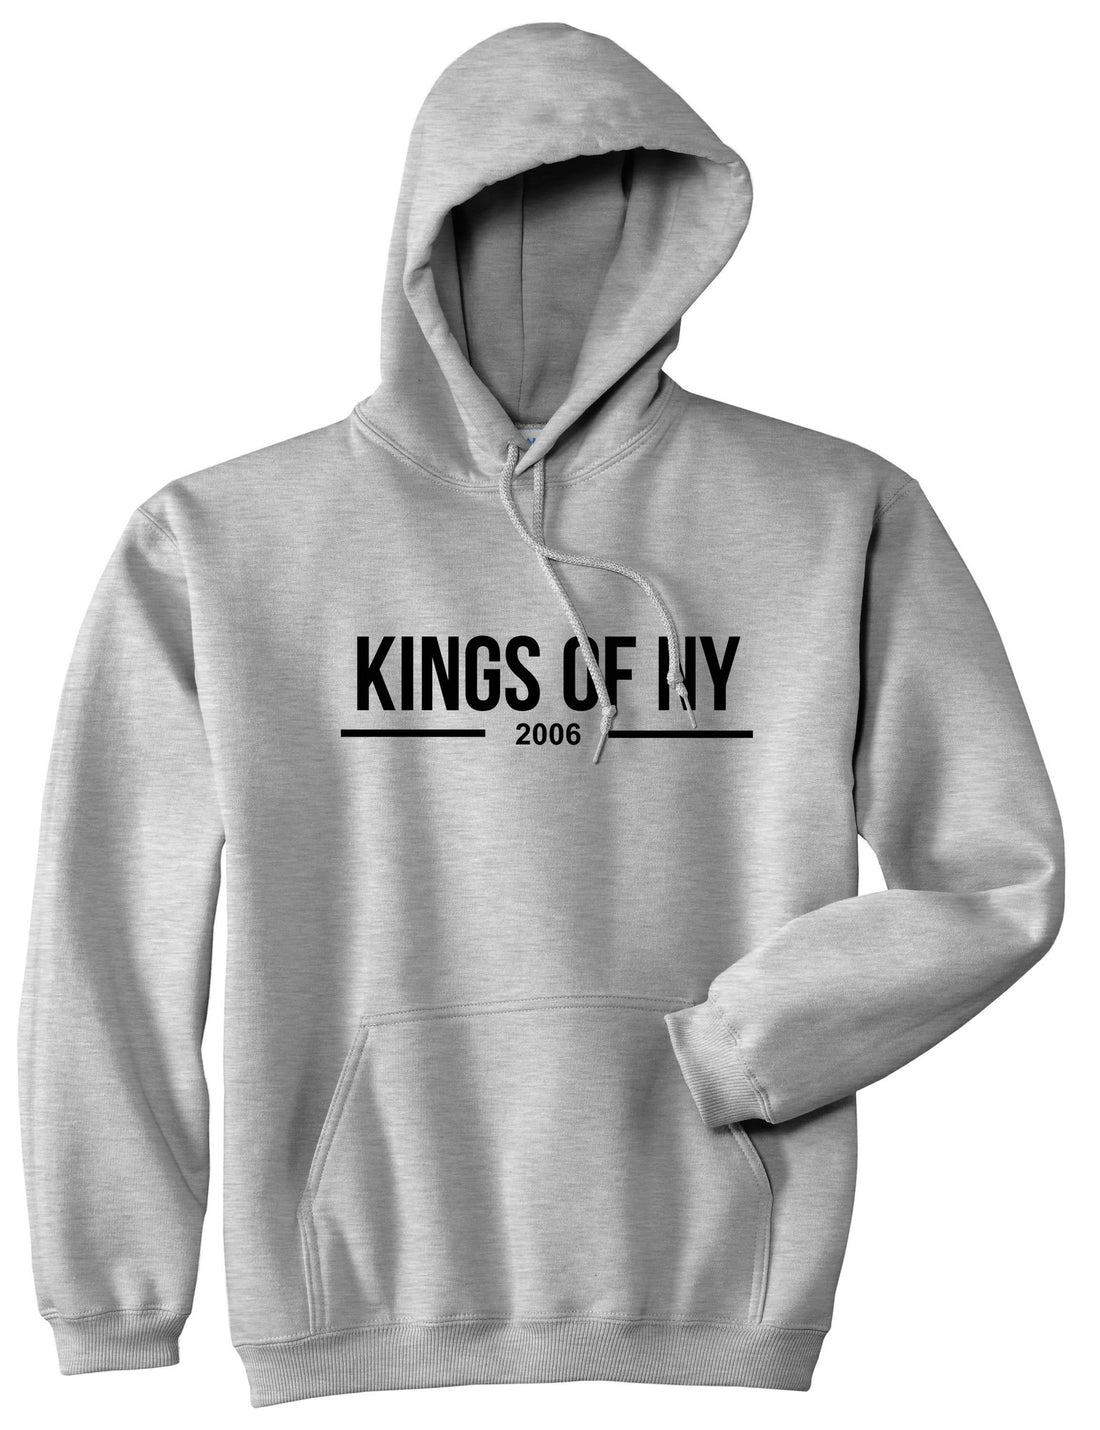 Kings Of NY 2006 Logo Lines Boys Kids Pullover Hoodie Hoody in Grey By Kings Of NY